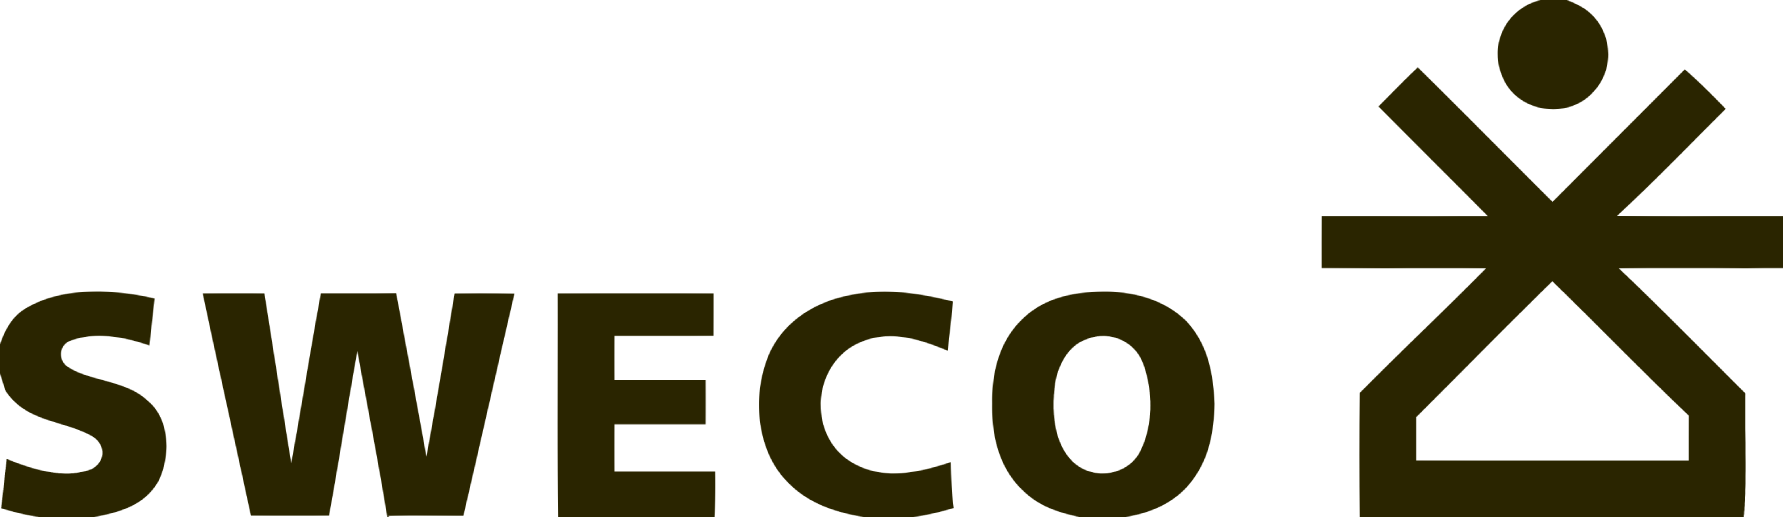 Sweco Trainee Program logo